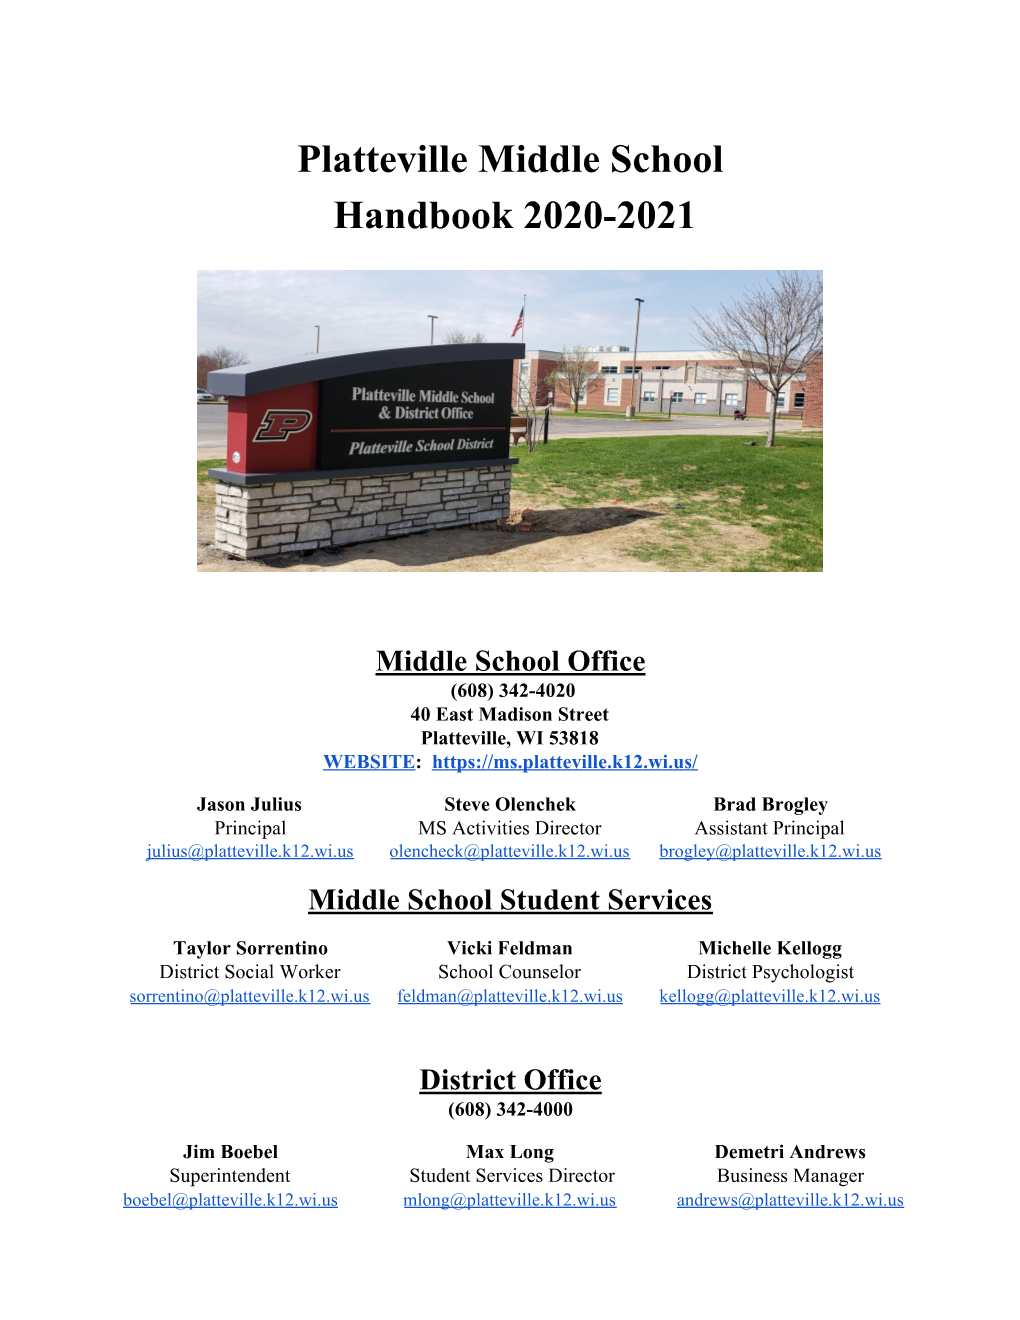 Platteville Middle School Handbook 2020-2021